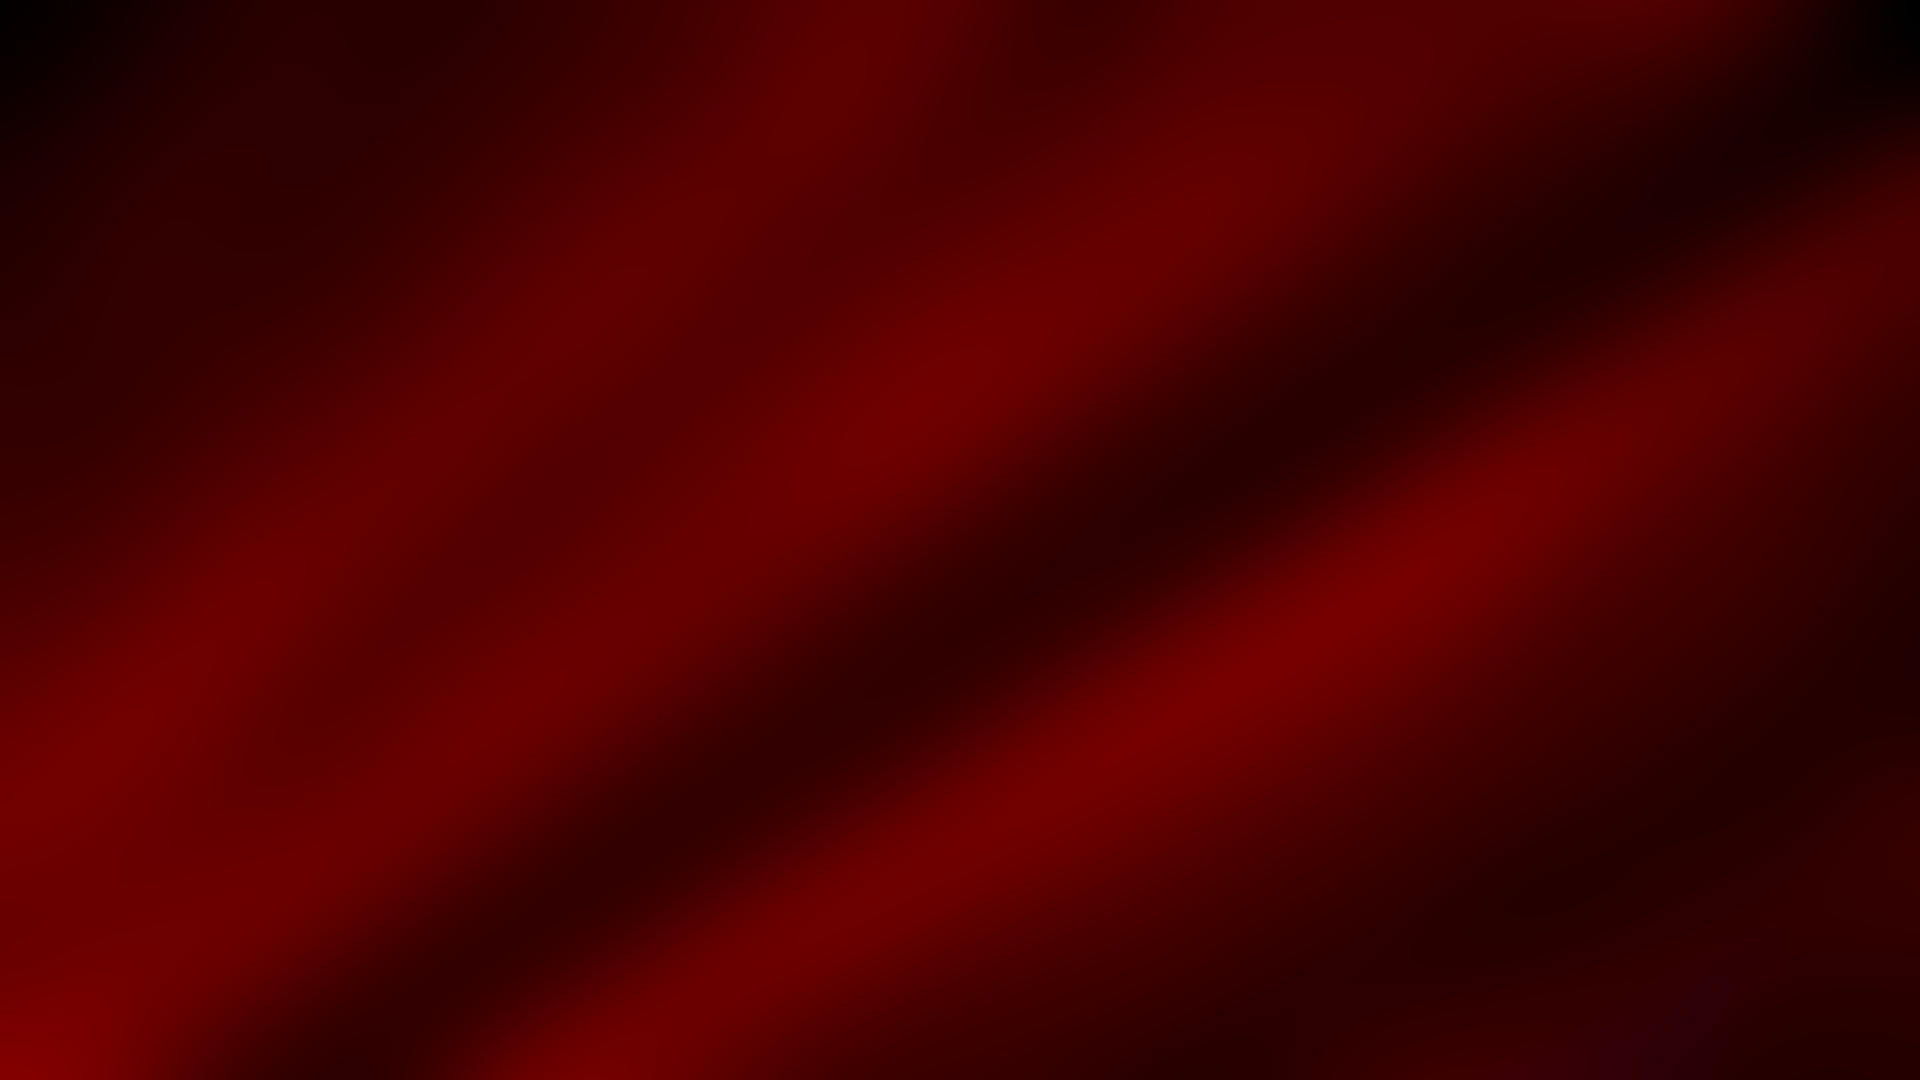 dark red wallpaper,red,black,maroon,pattern,magenta